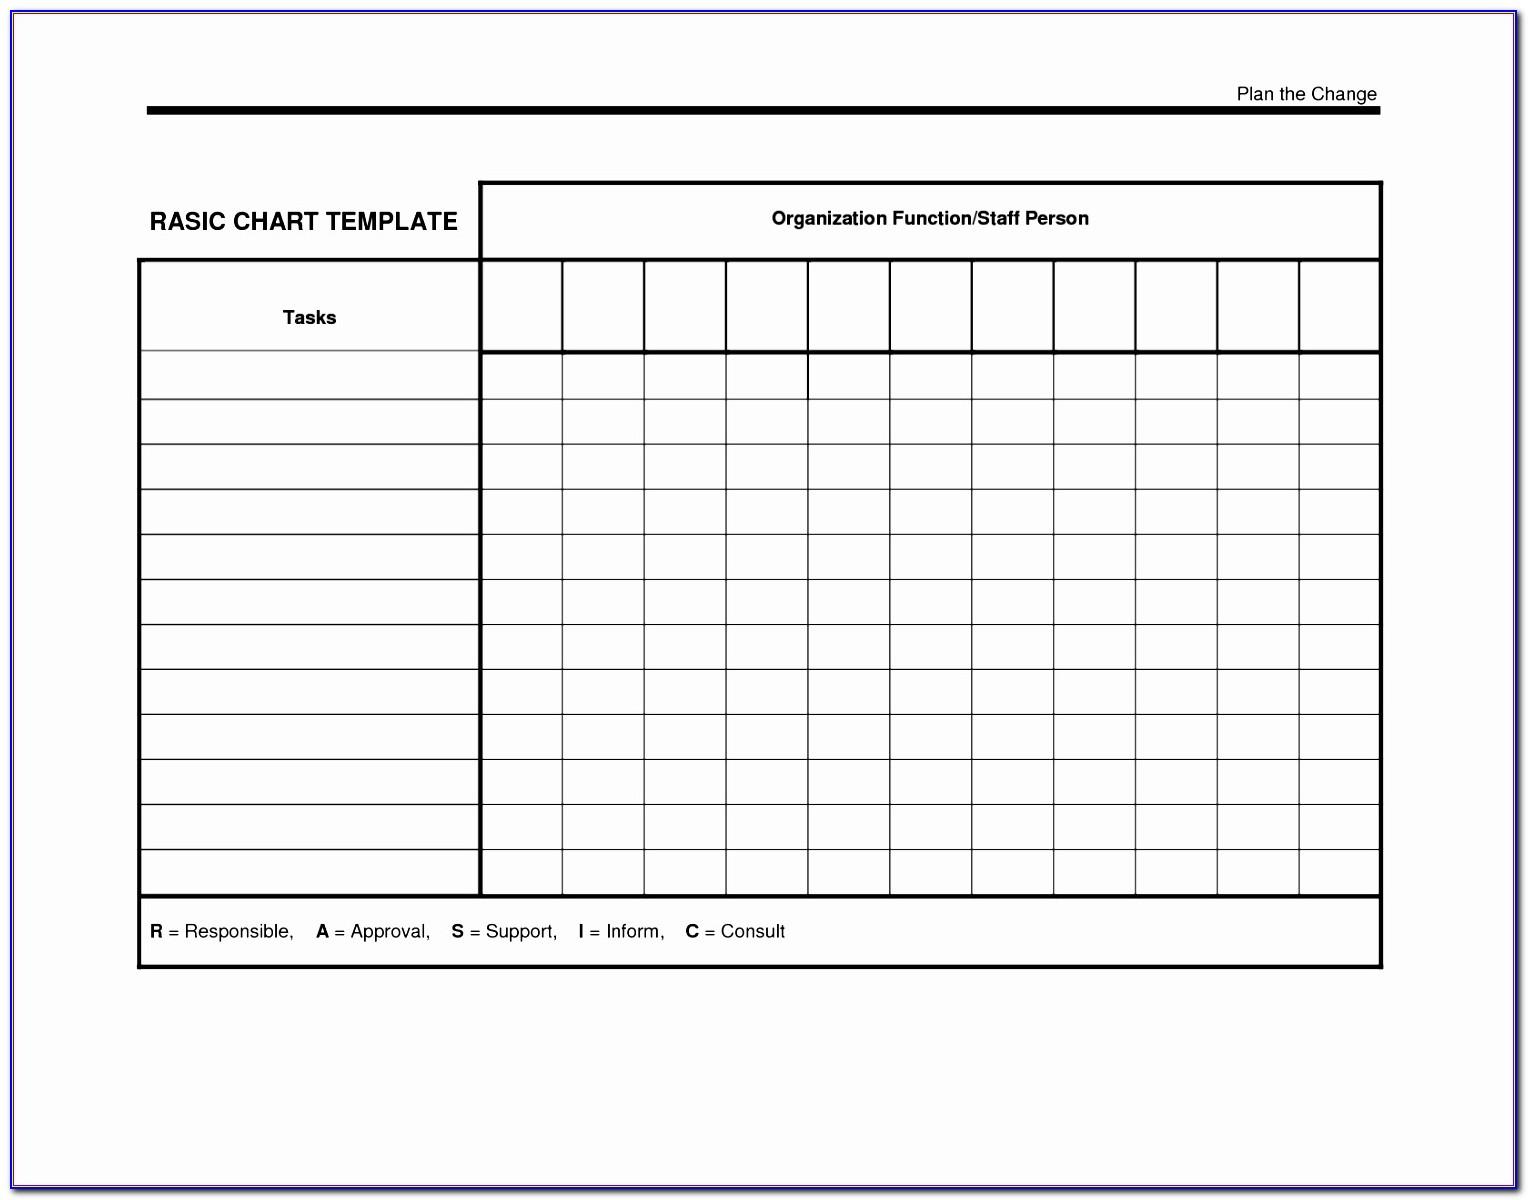 Project Portfolio Management Spreadsheet Template